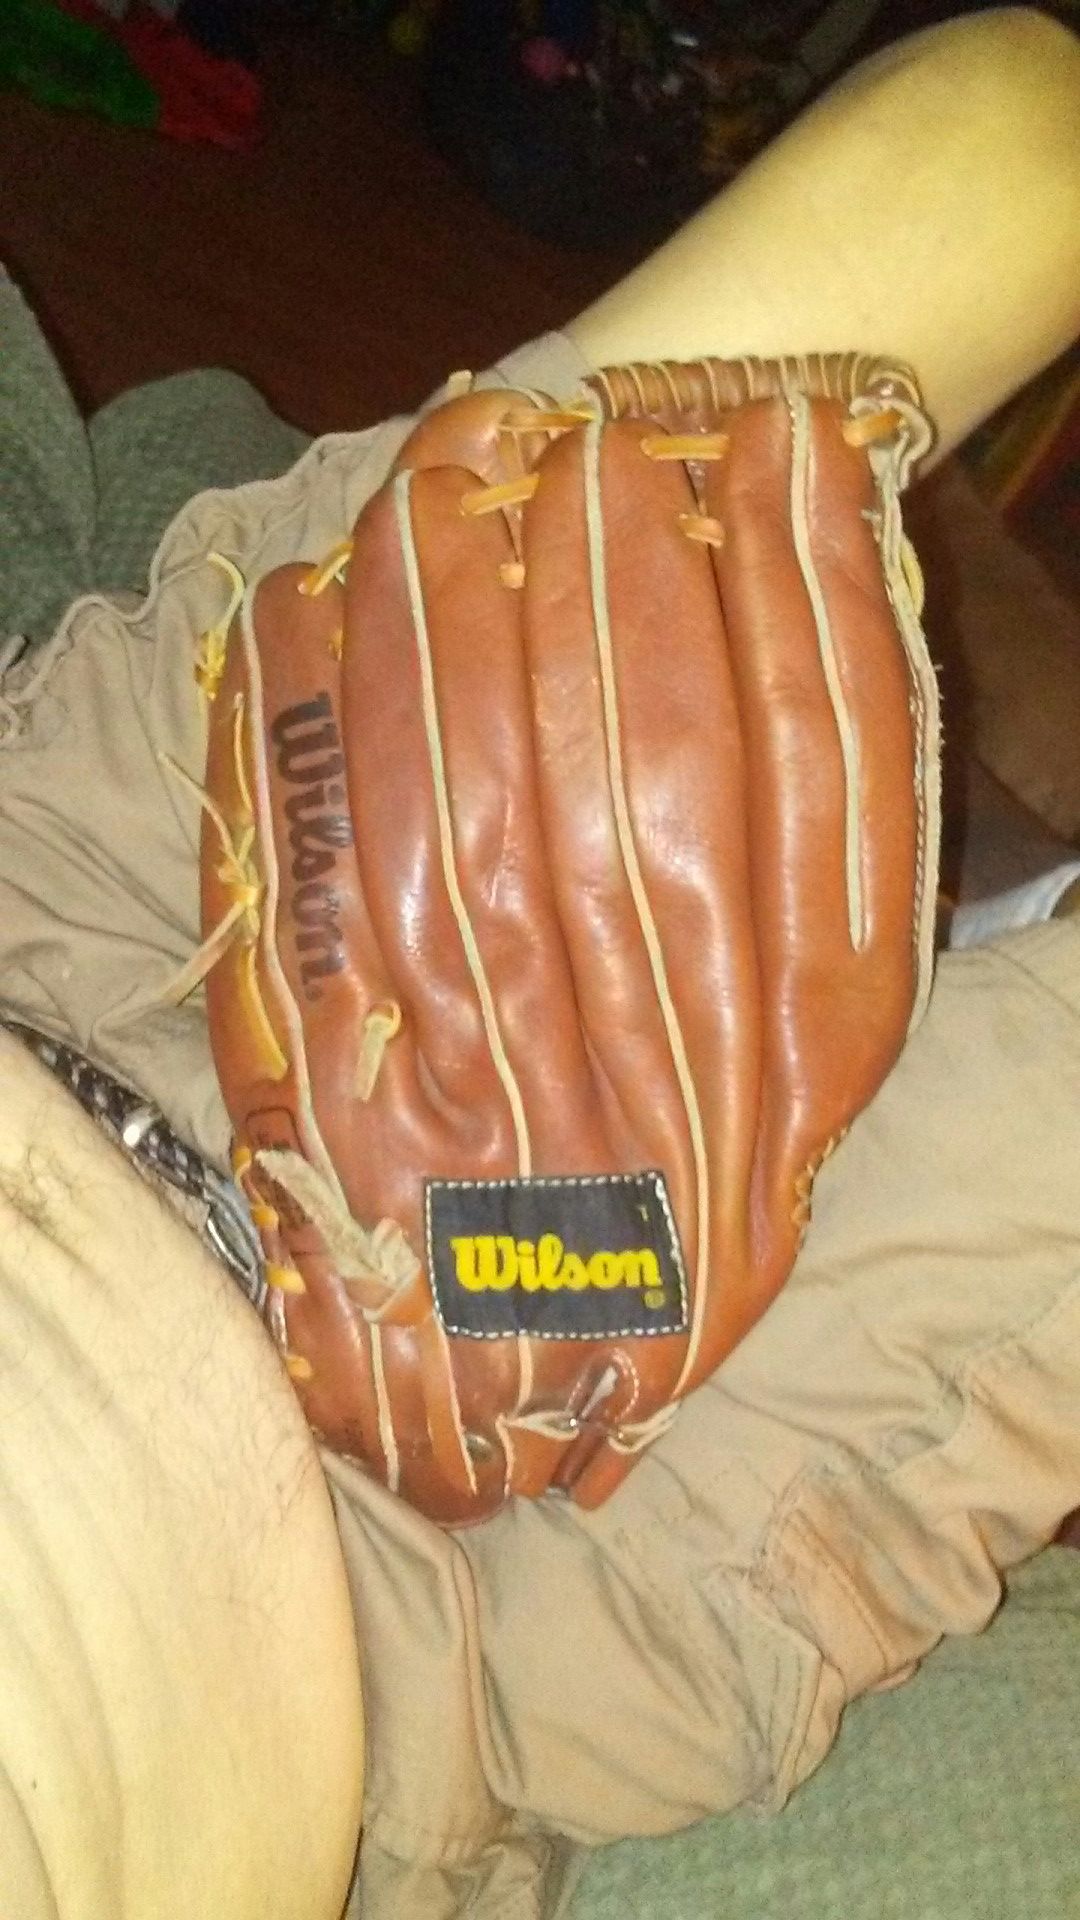 Wilson glove. A2124